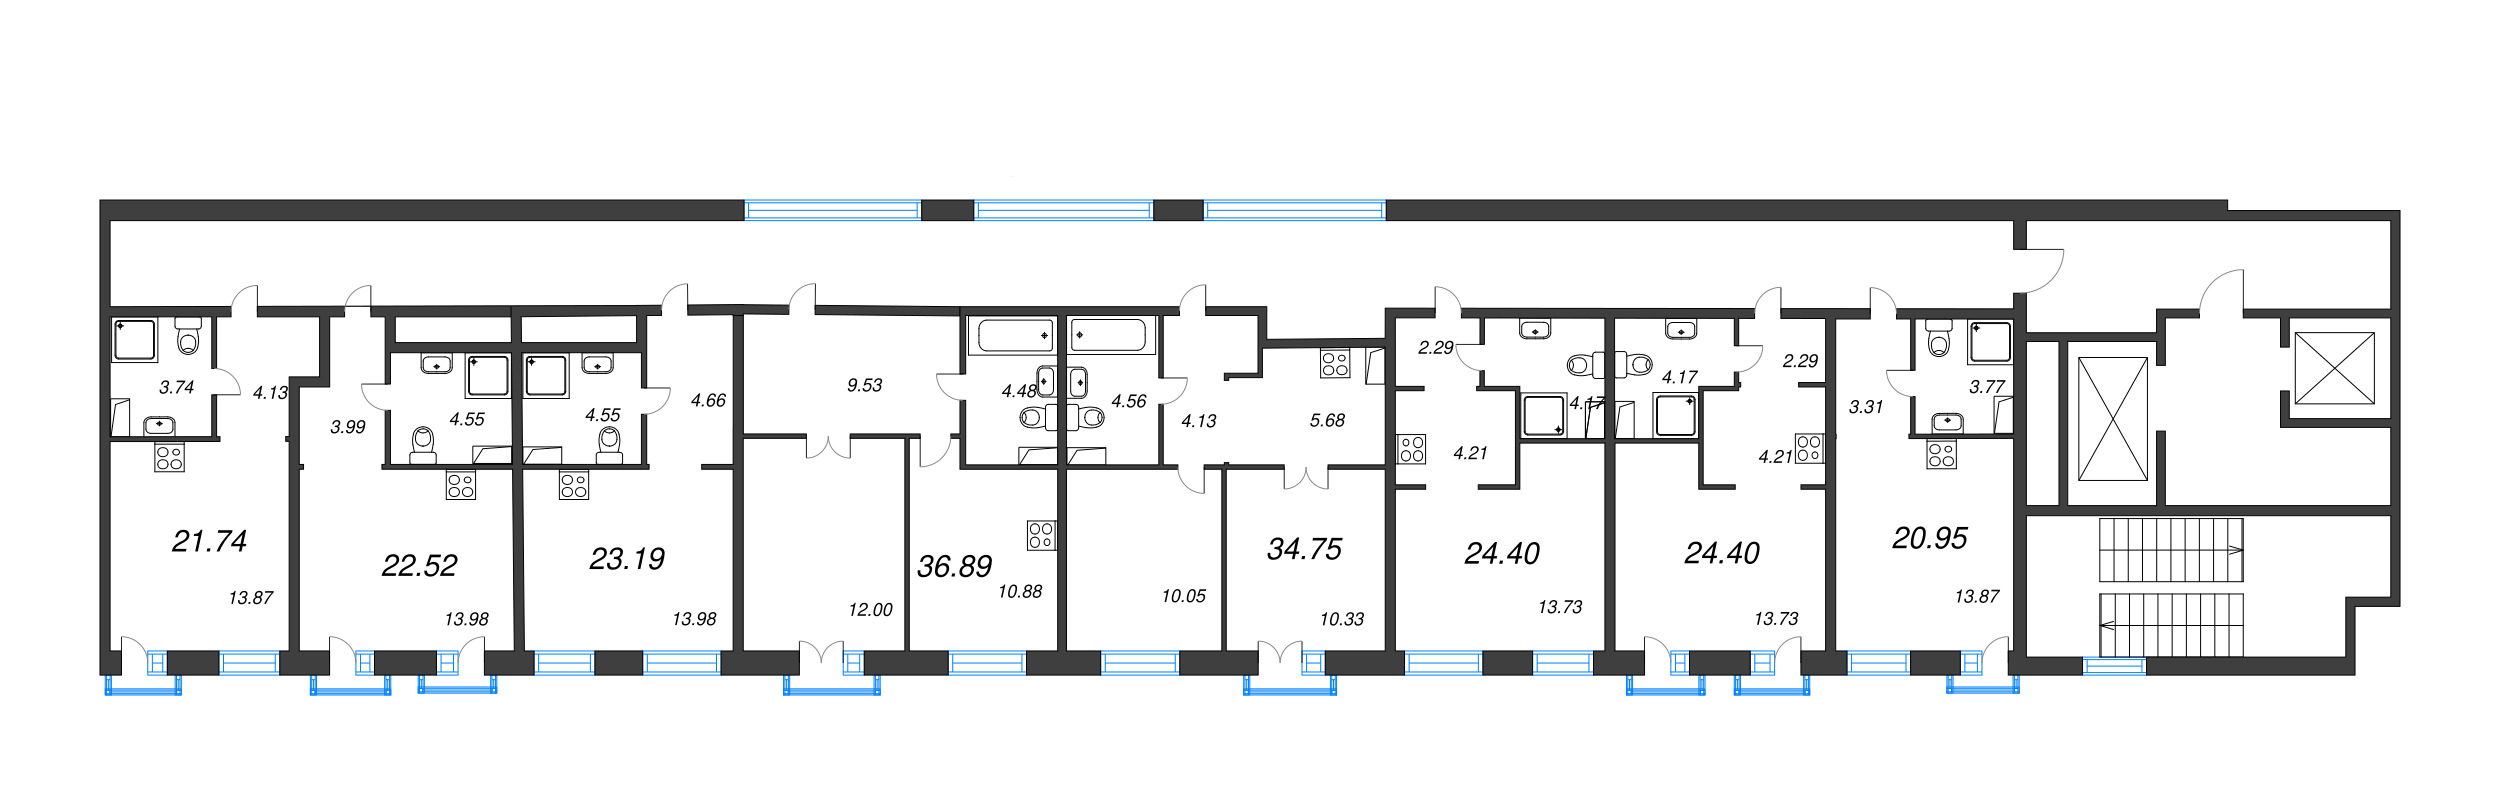 2-комнатная (Евро) квартира, 36.89 м² в ЖК "ID Polytech" - планировка этажа